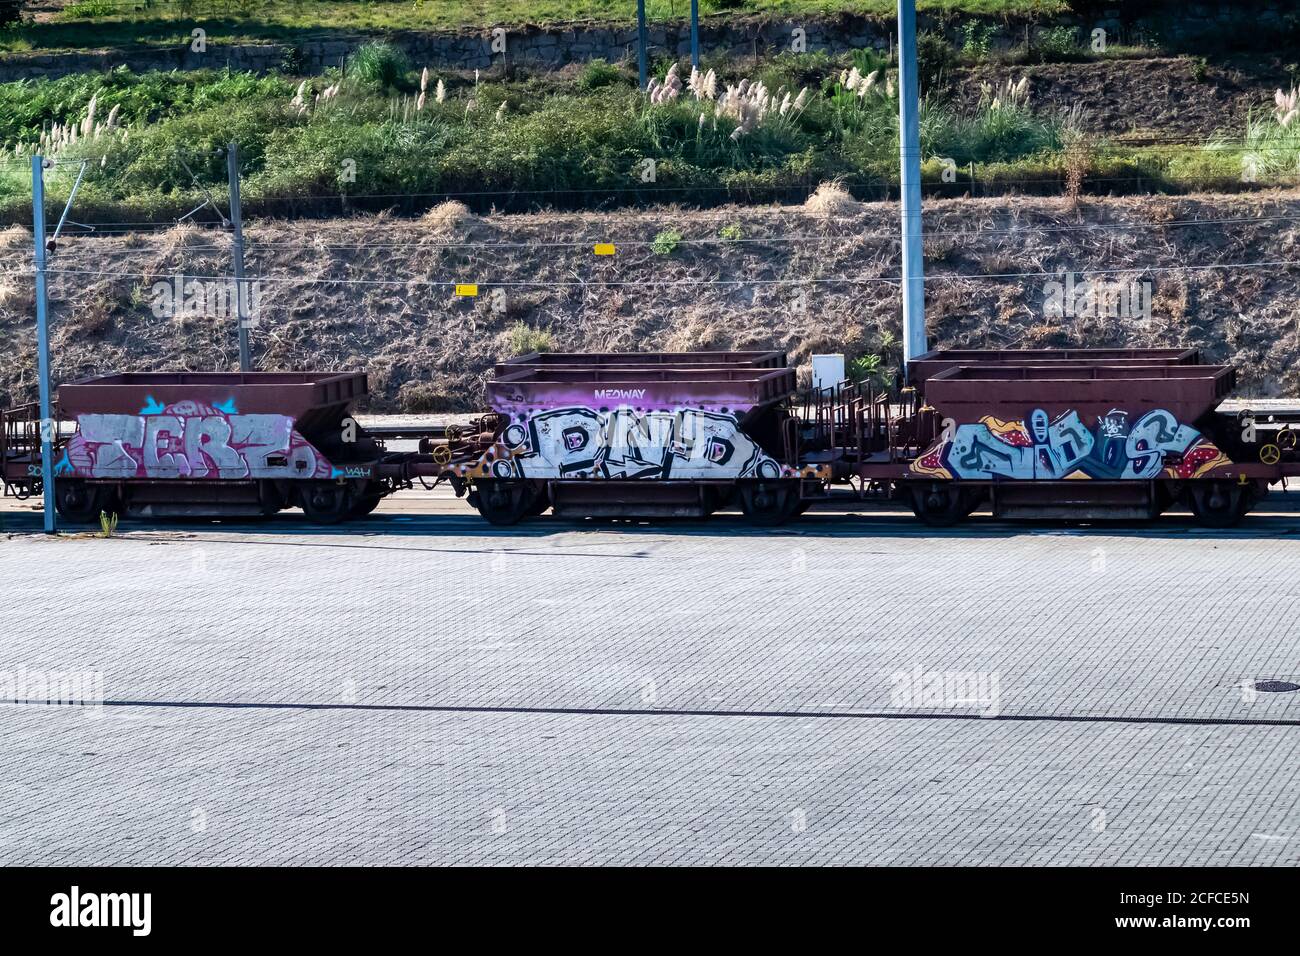 Street Art Graffiti auf Transportwagen in Portugal, aveleda Bahnhof. Stockfoto